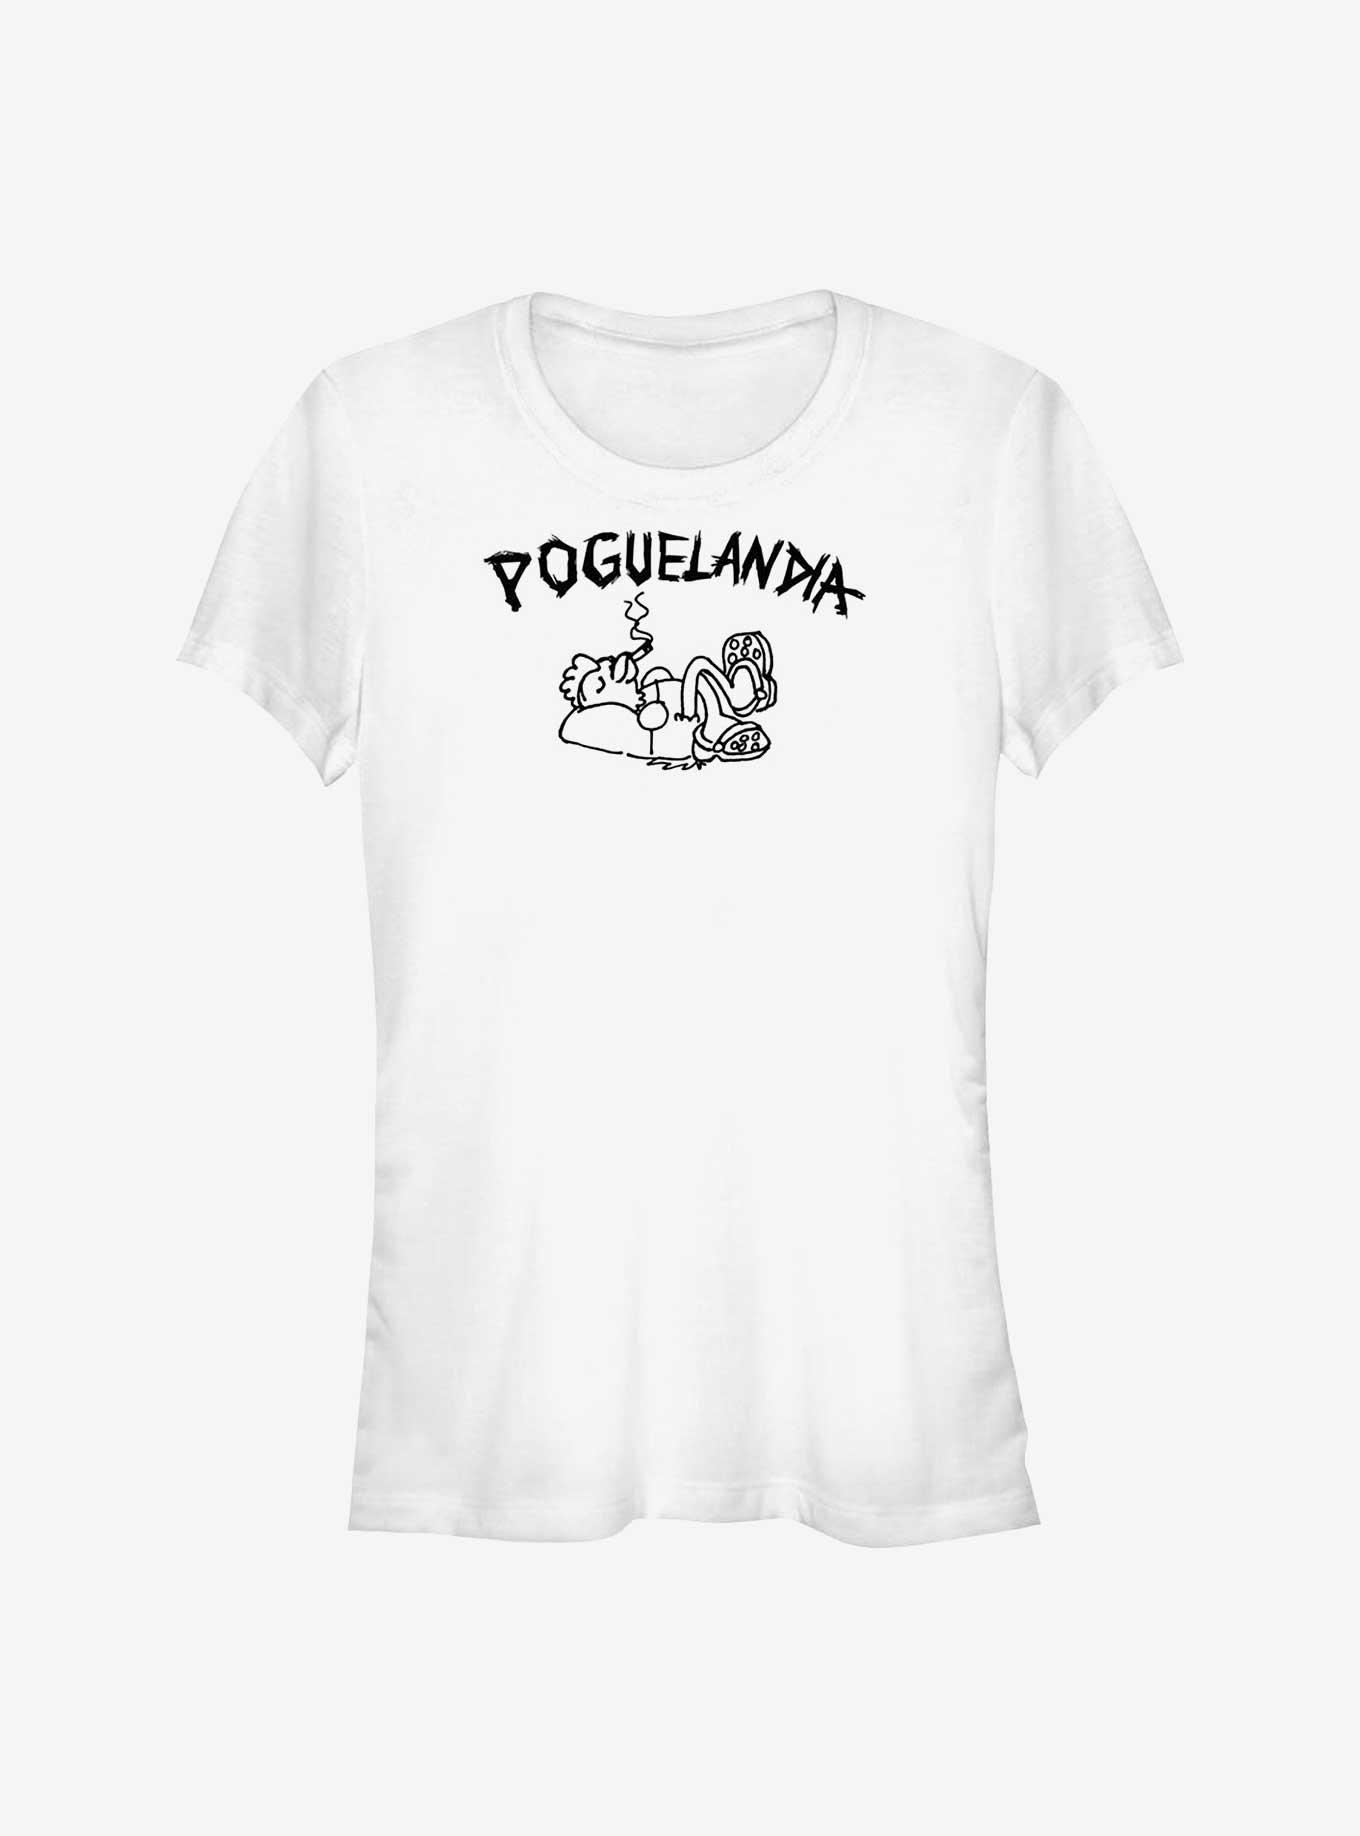 Outer Banks Poguelandia Life Girls T-Shirt, WHITE, hi-res